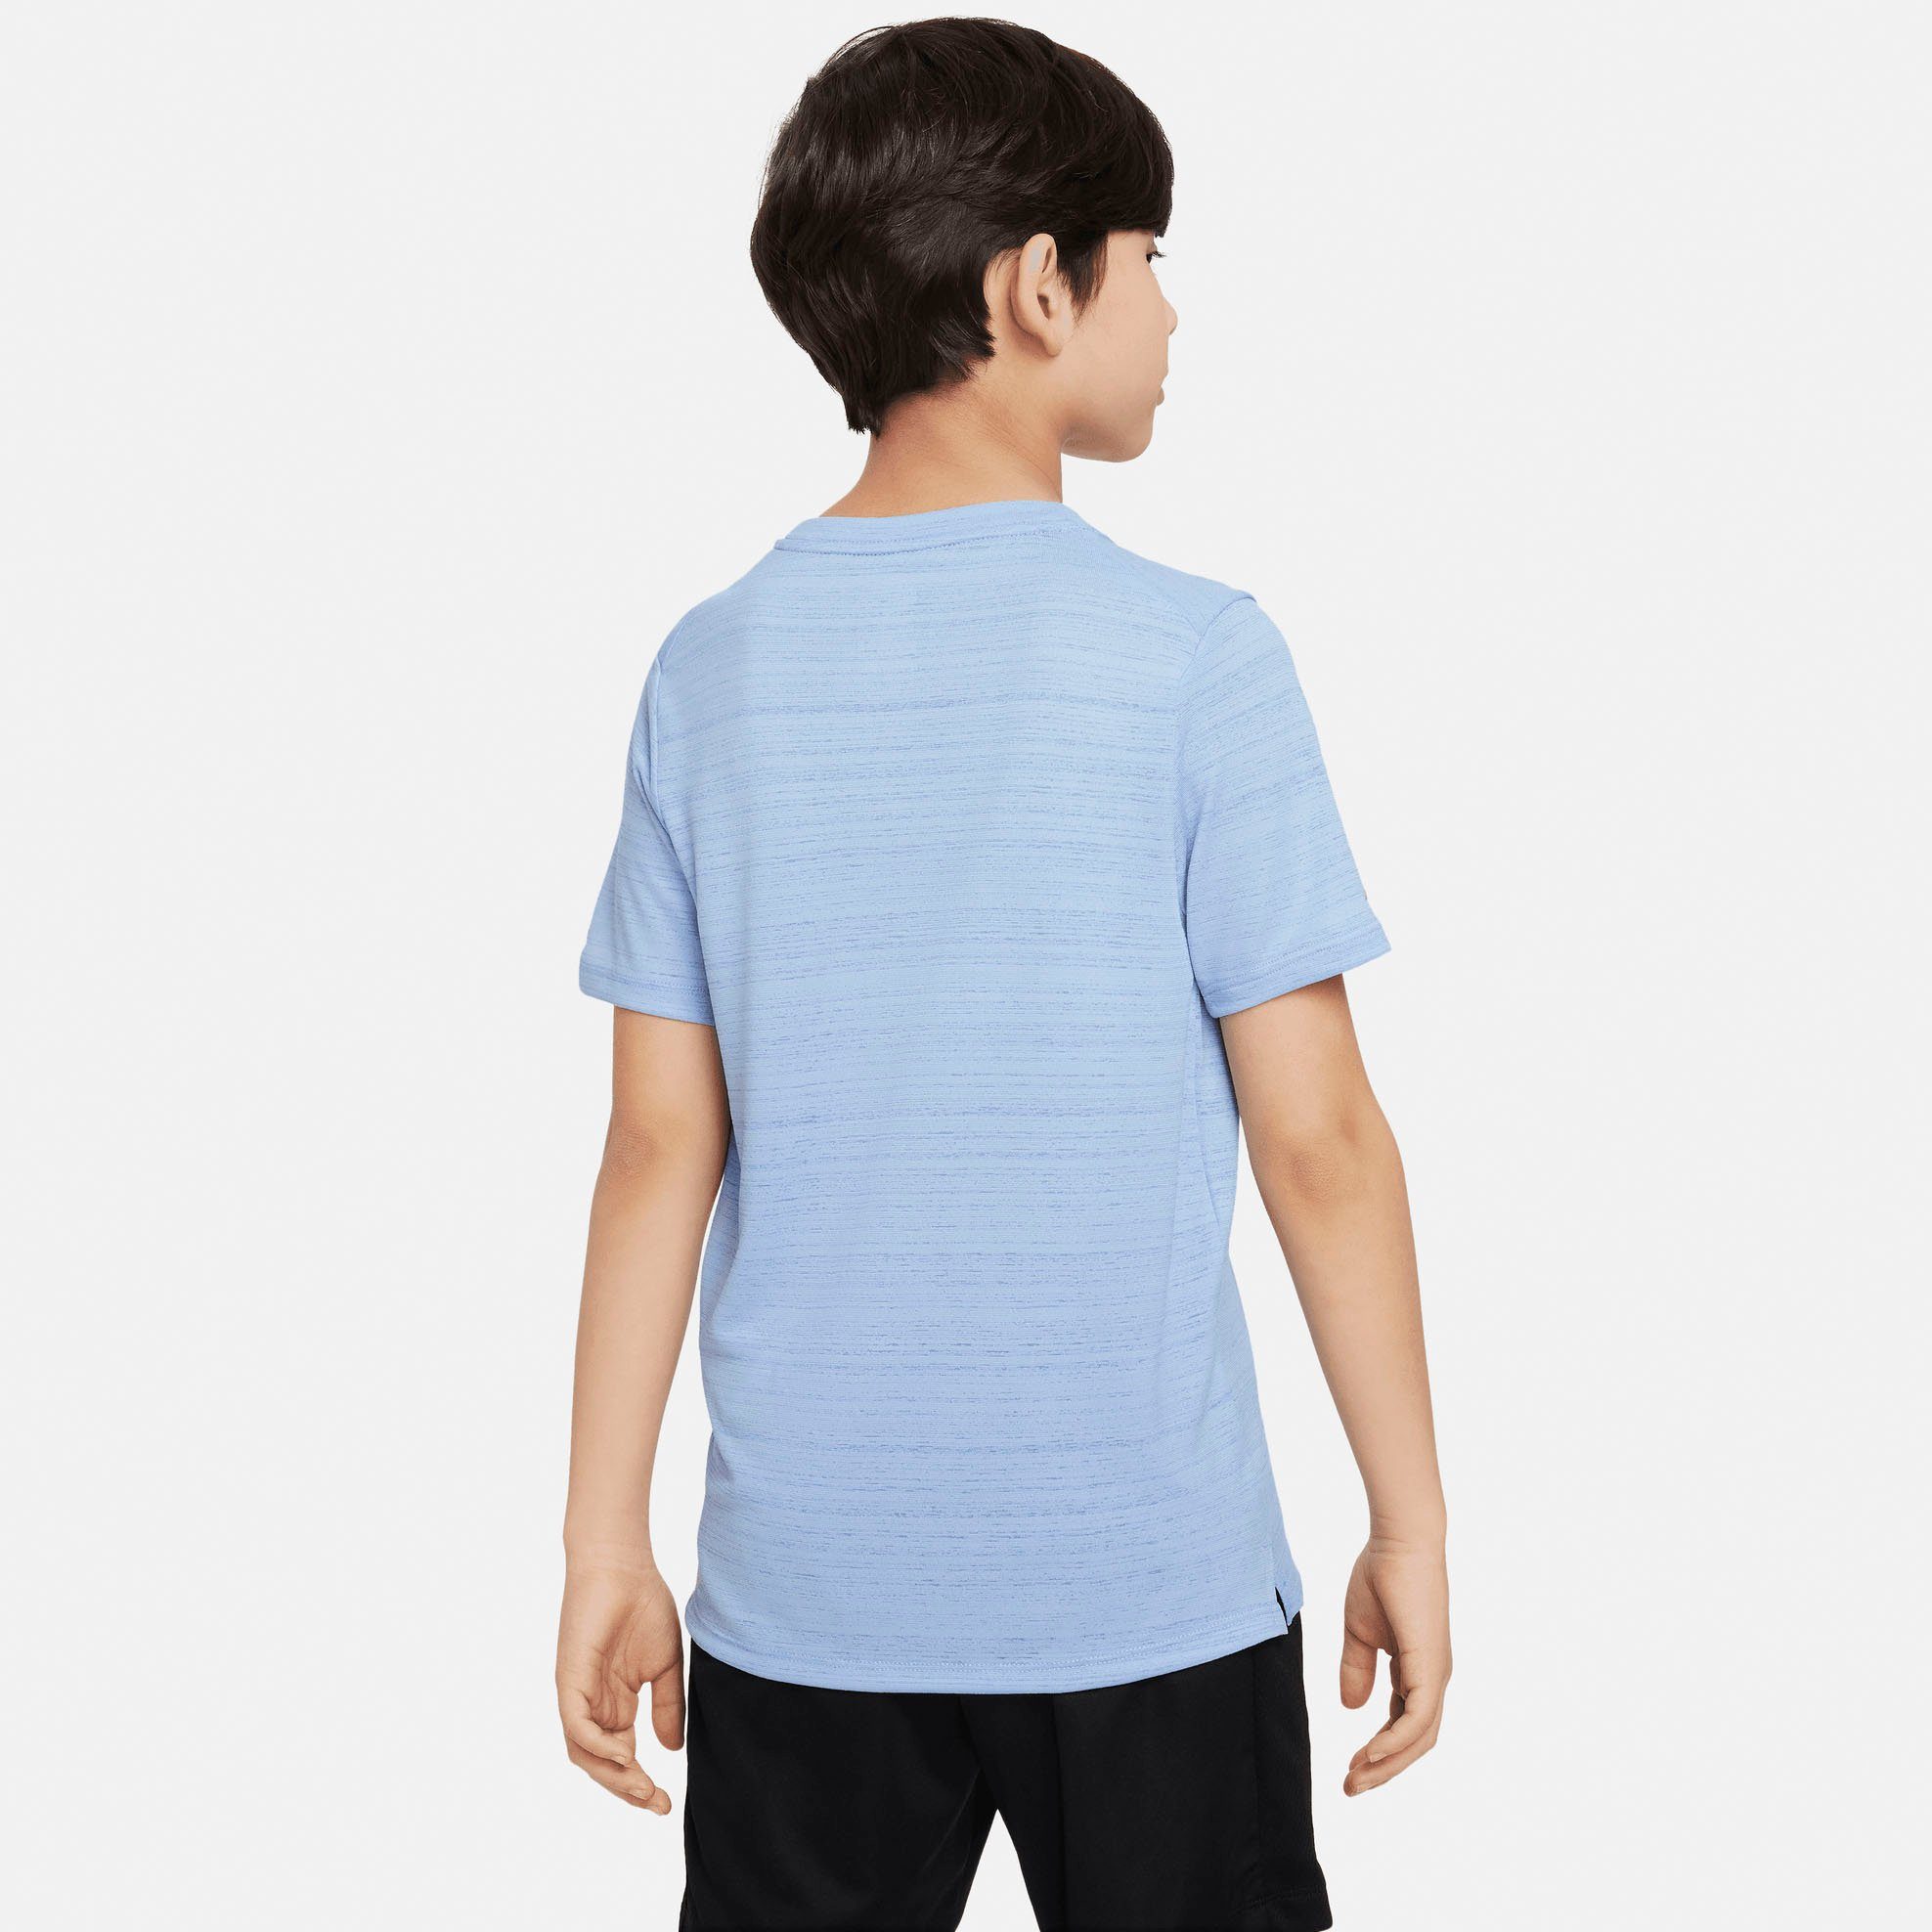 Nike Miler Training Dri-FIT (Boys) blau Big Kids' Top Trainingsshirt